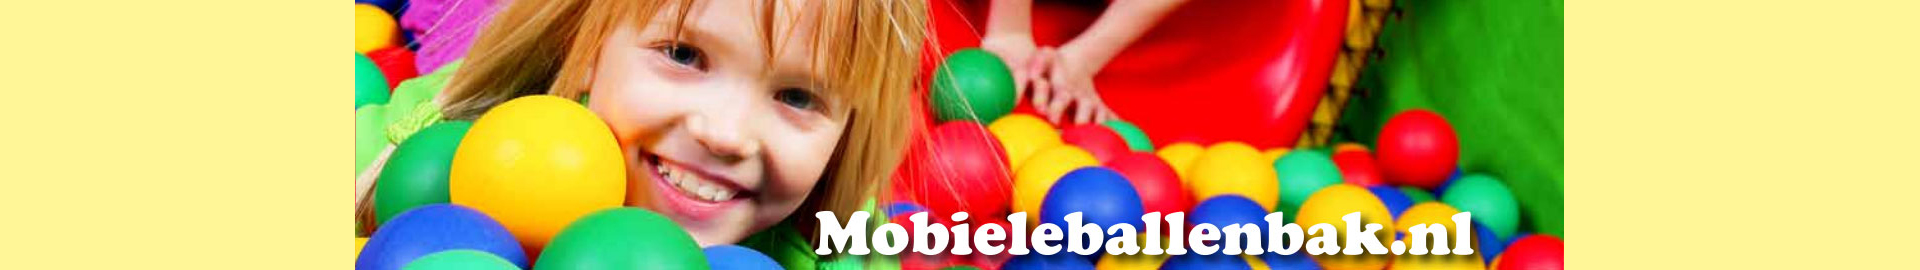 Mobieleballenbak.nl